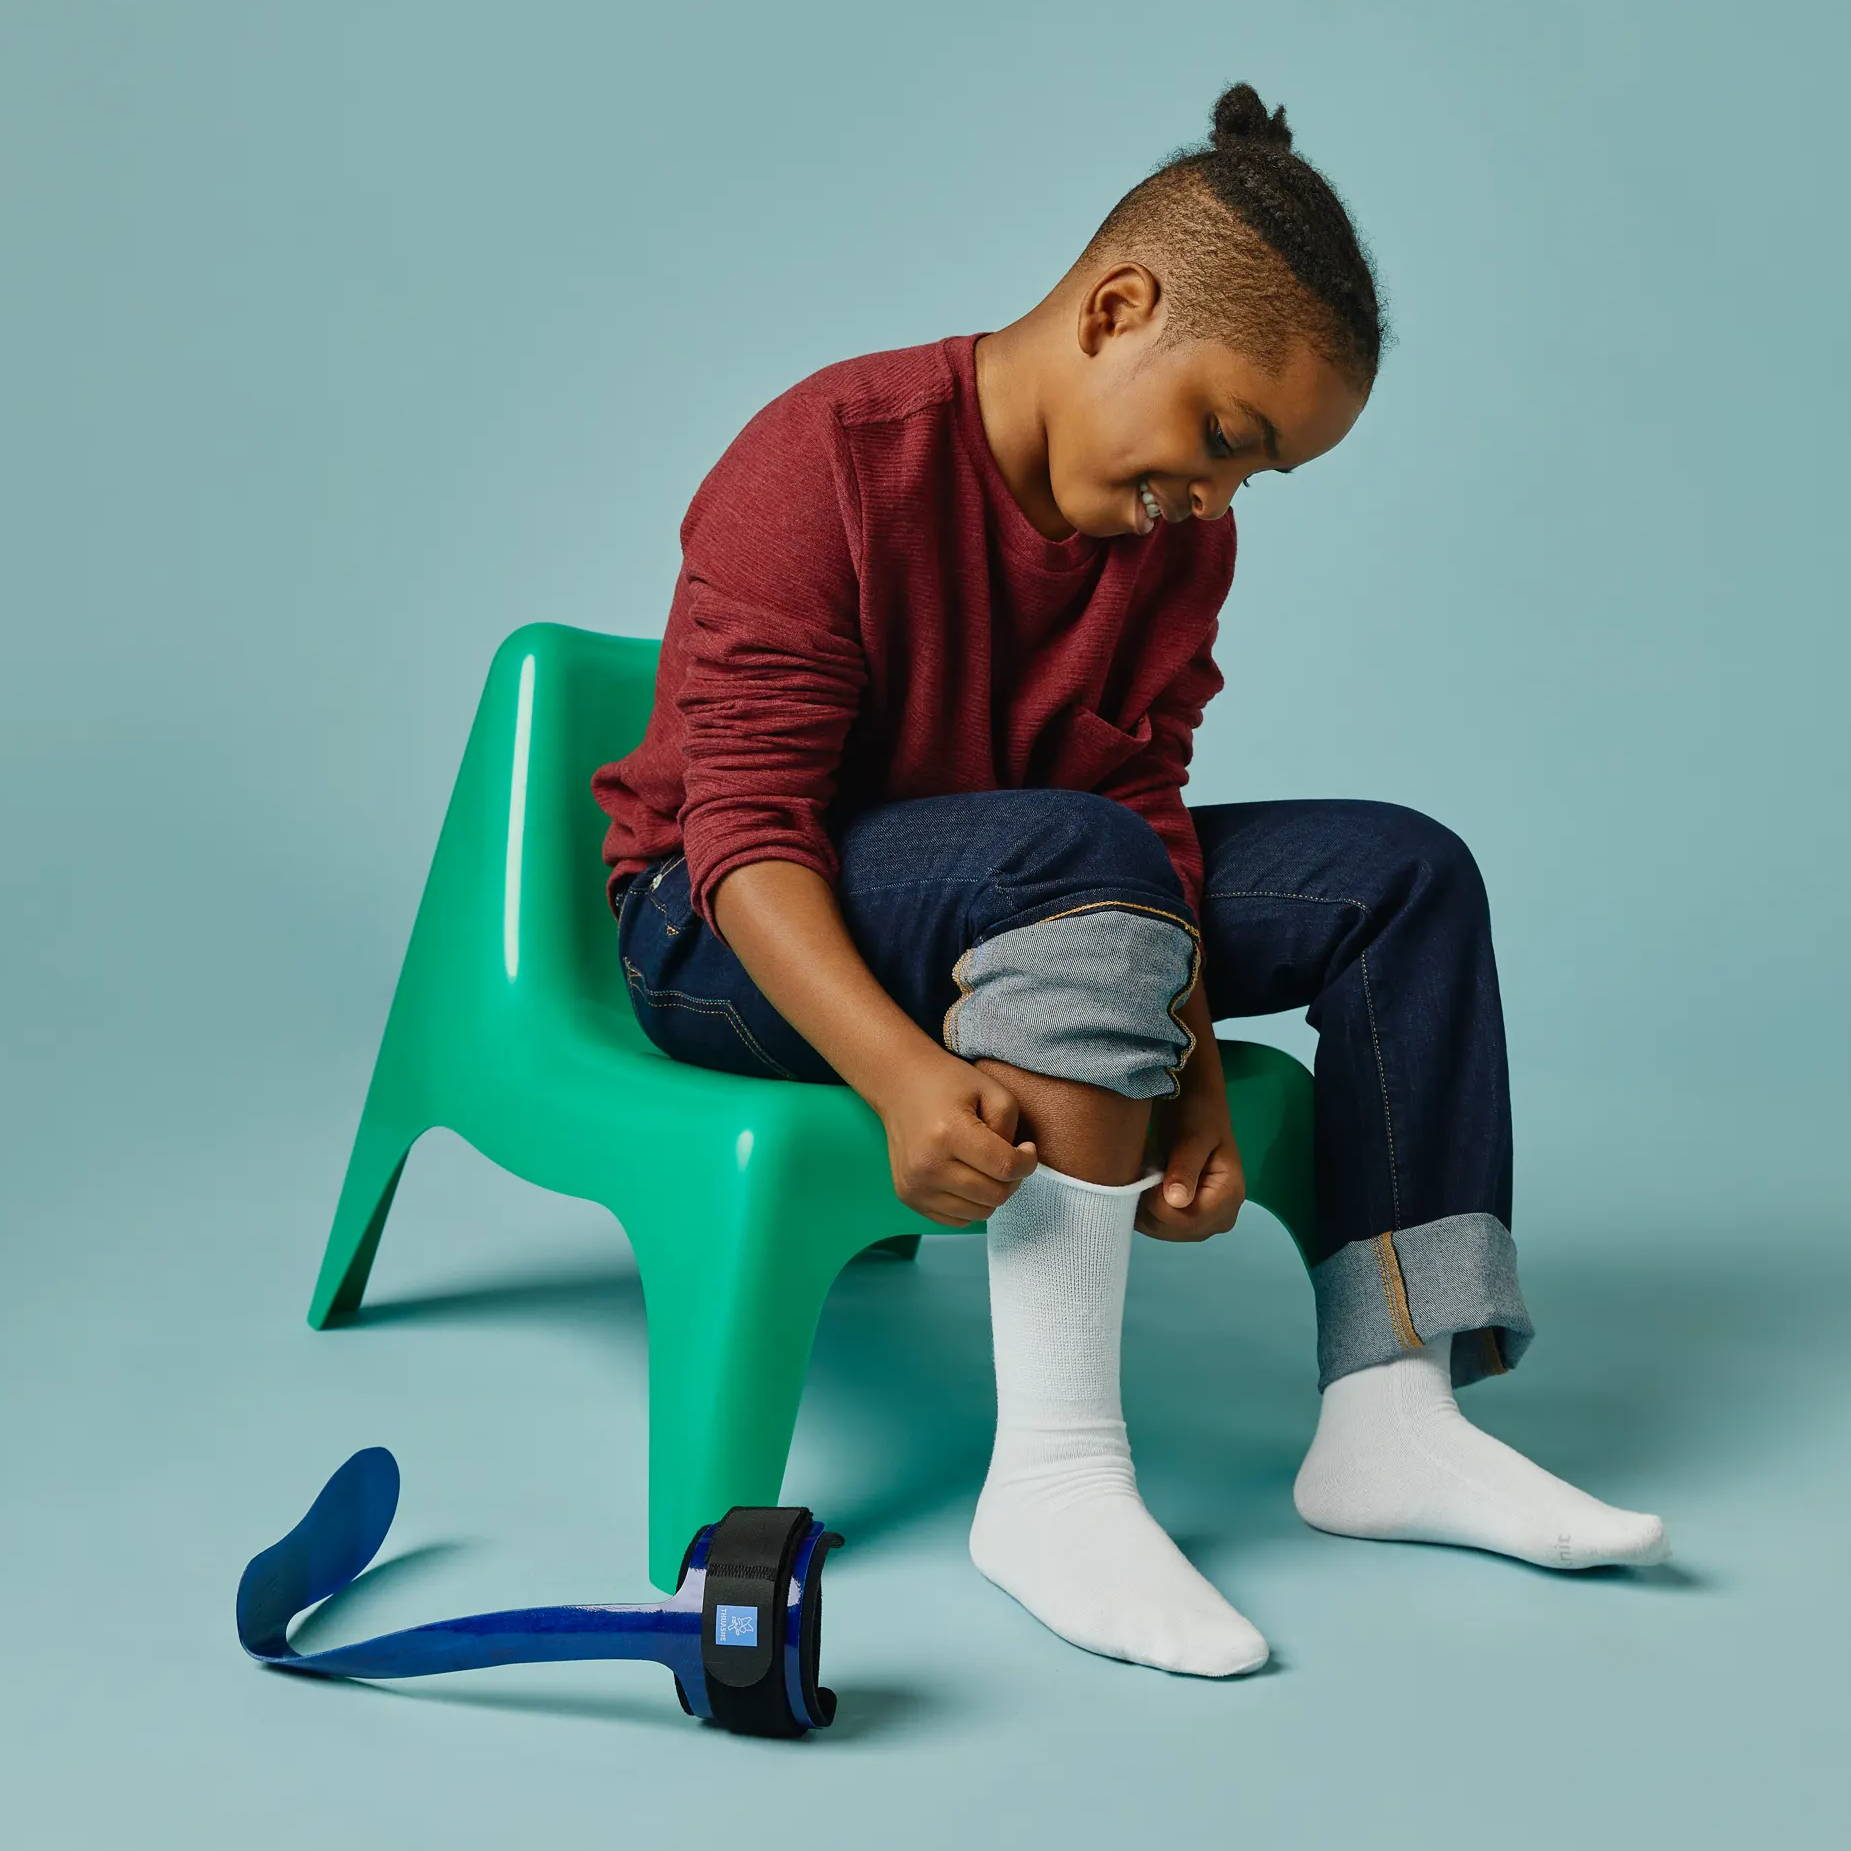 SmartKnit Kids Seamless AFO Socks with Thuasne AFO brace; boy putting on AFO socks